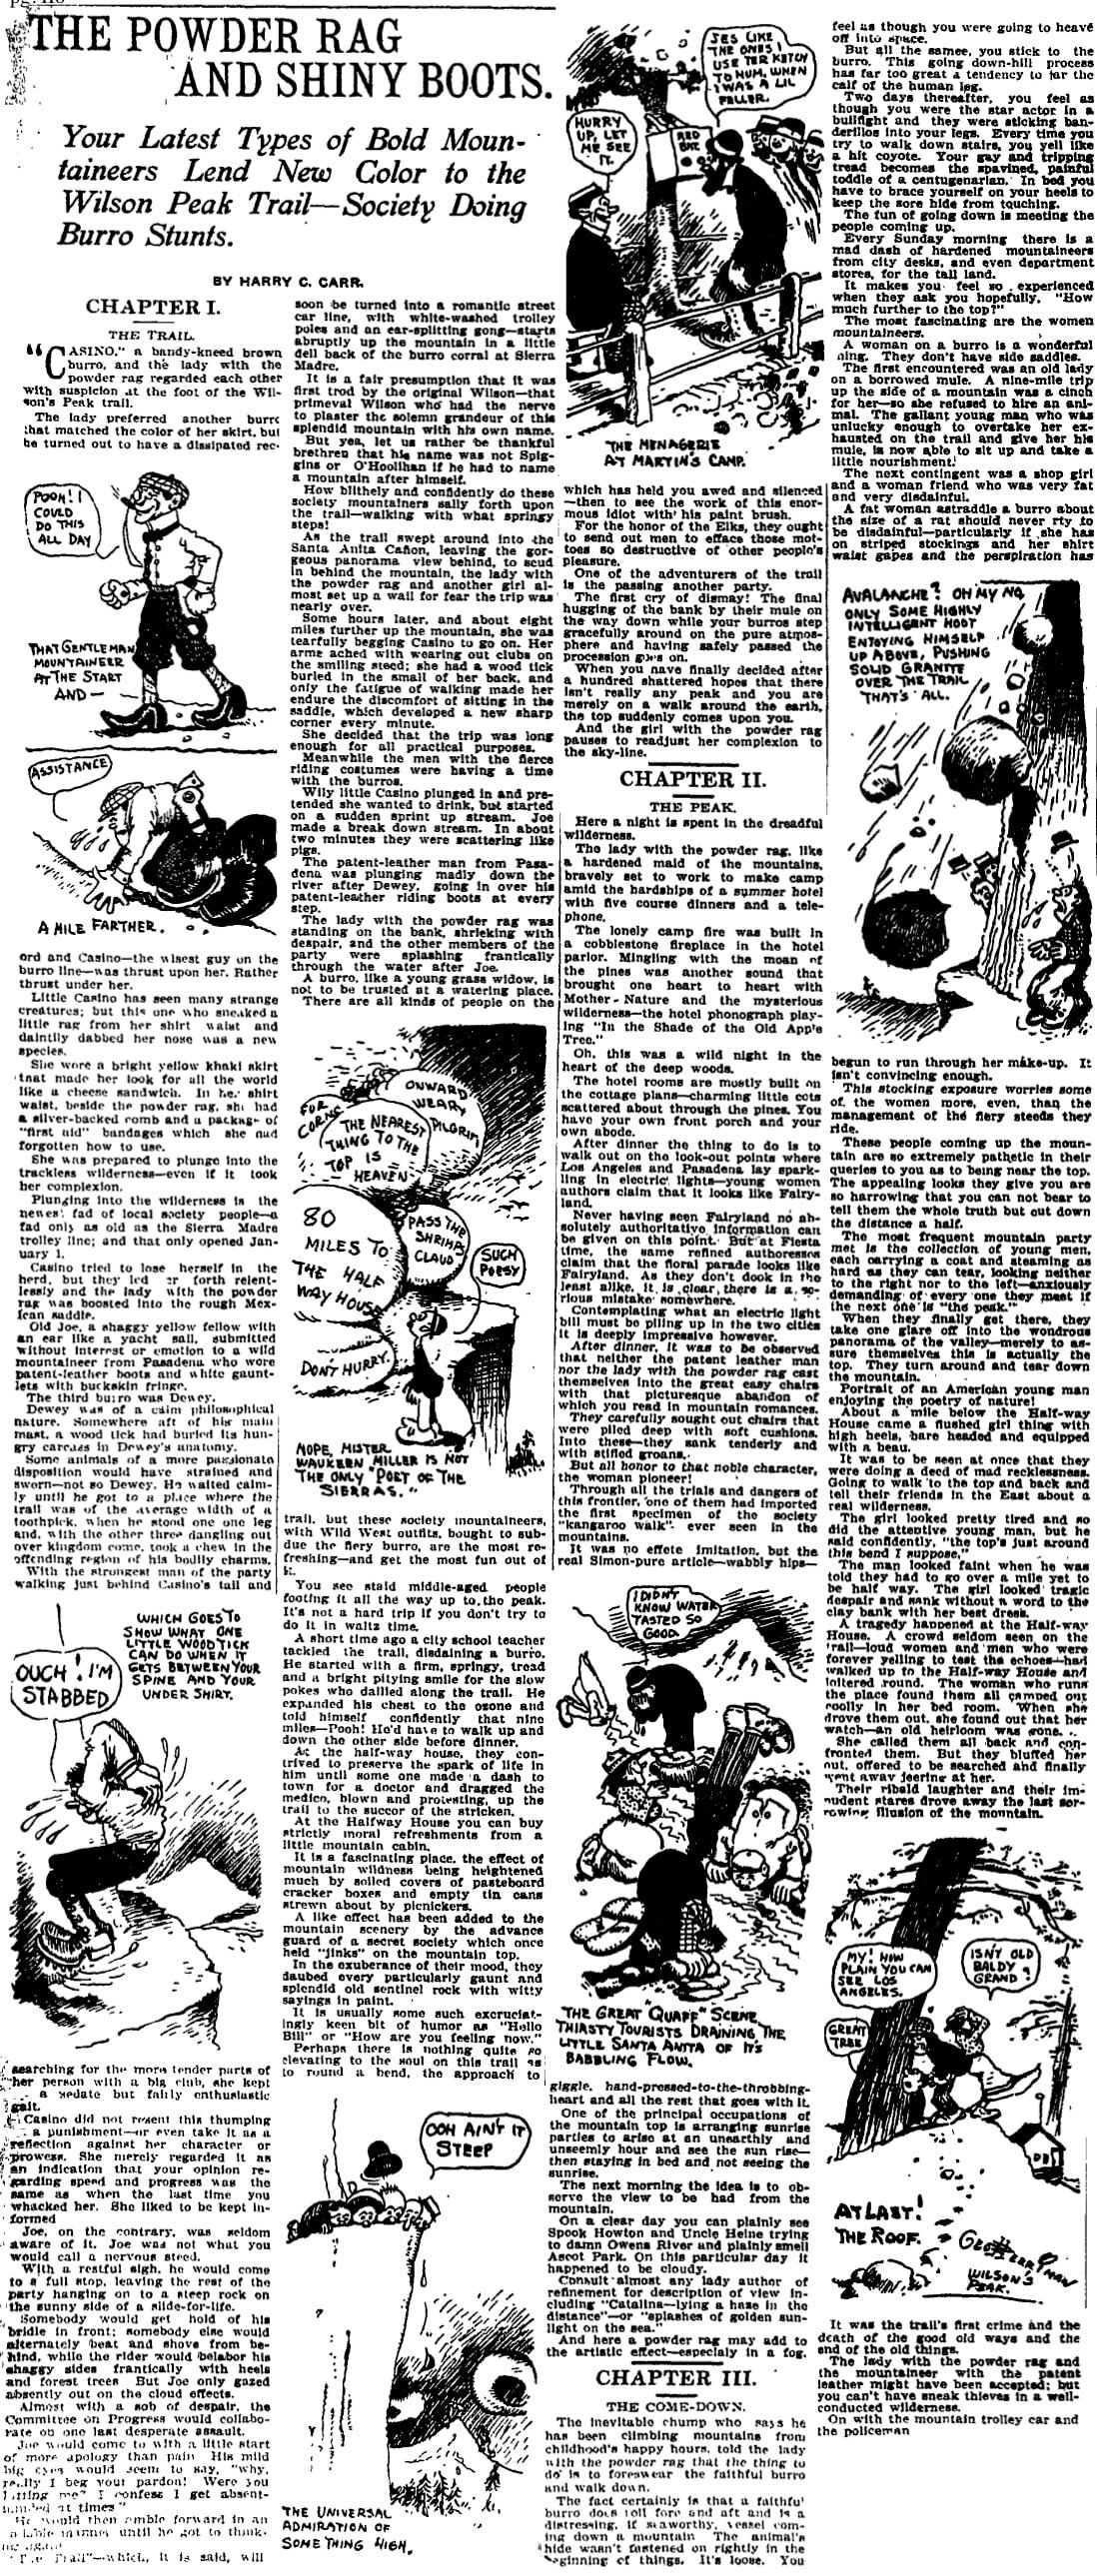 08-1906-03-04-latimes-herriman-news-cartoons.jpg